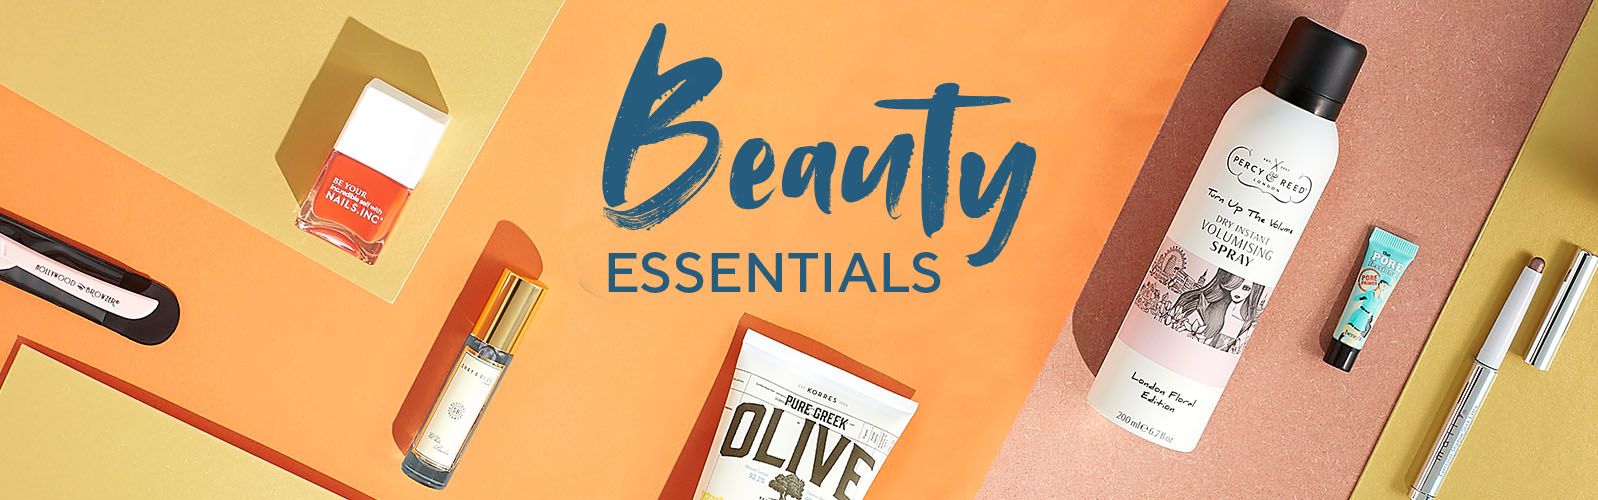 Beauty essentials